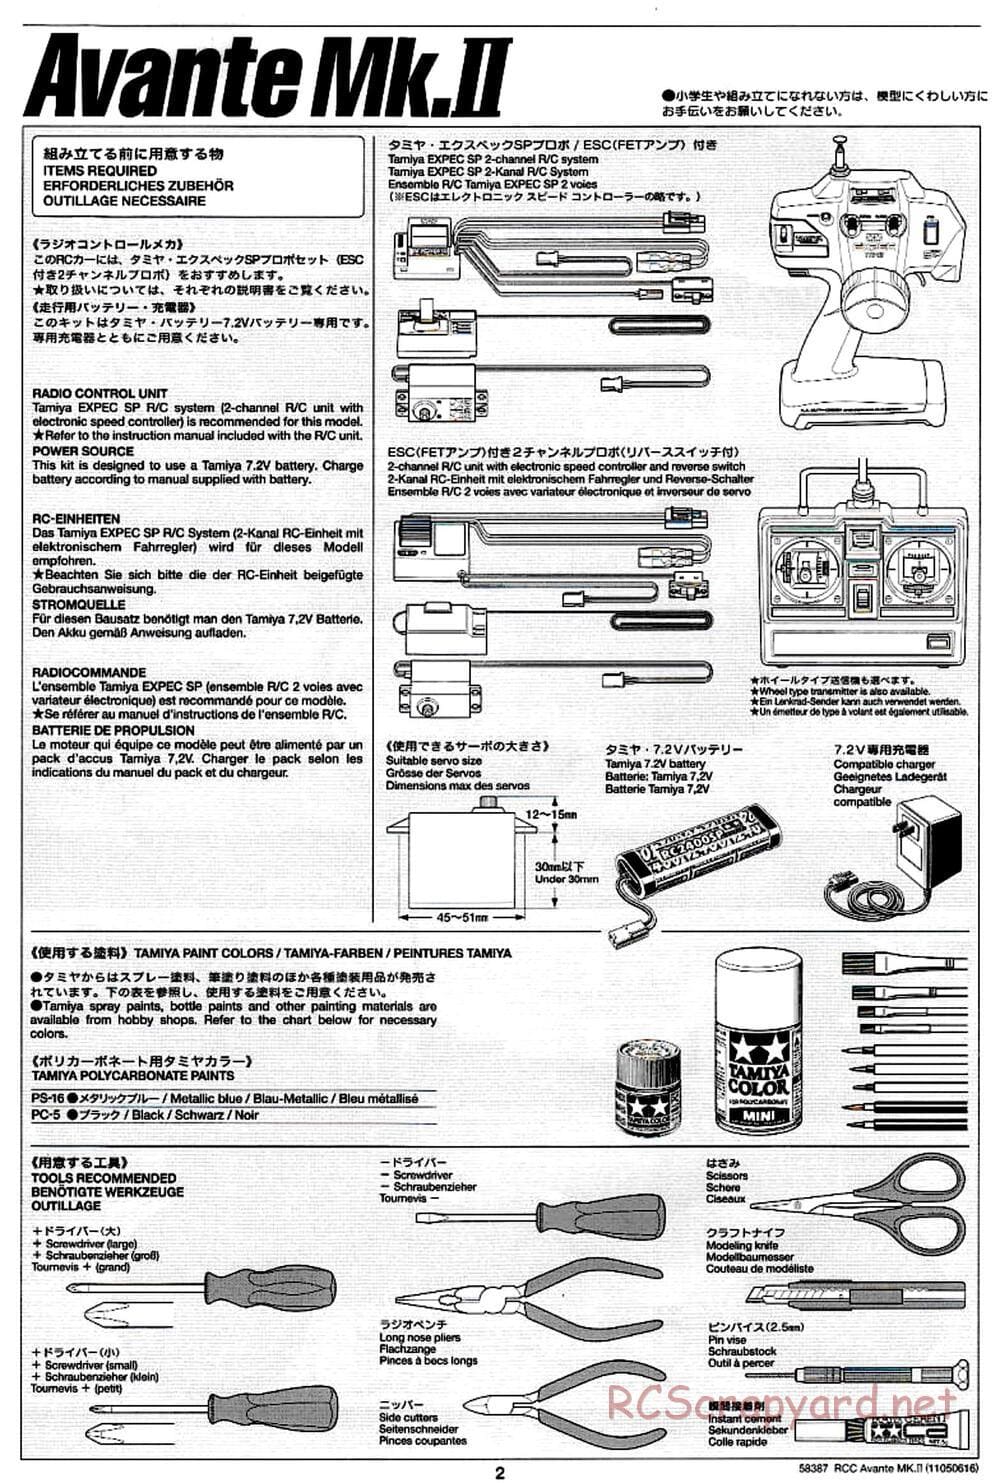 Tamiya - Avante Mk.II Chassis - Manual - Page 2